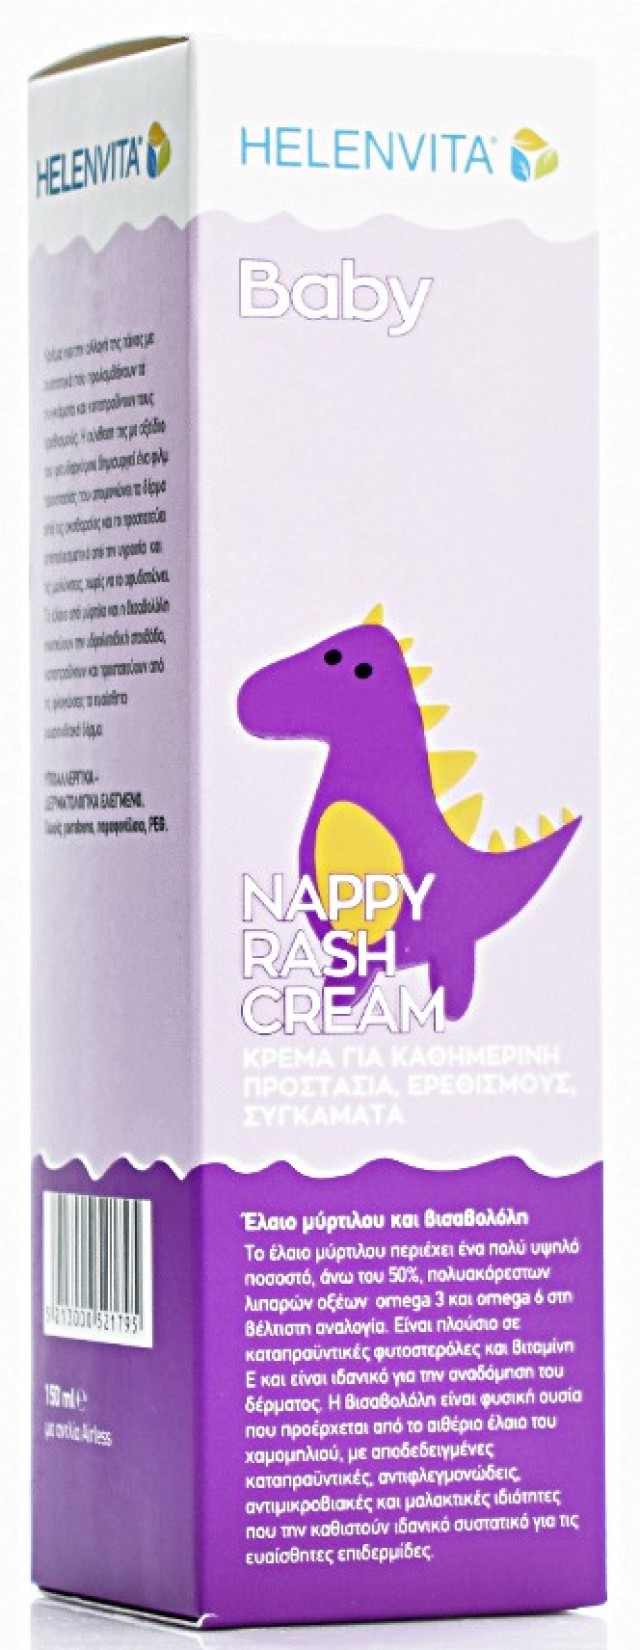 Helenvita Baby Nappy Rash Cream Κρέμα για την Καθημερινή Προστασία από Ερεθισμούς & Συγκάματα 150ml ΛΗΞΗ 30/11/23